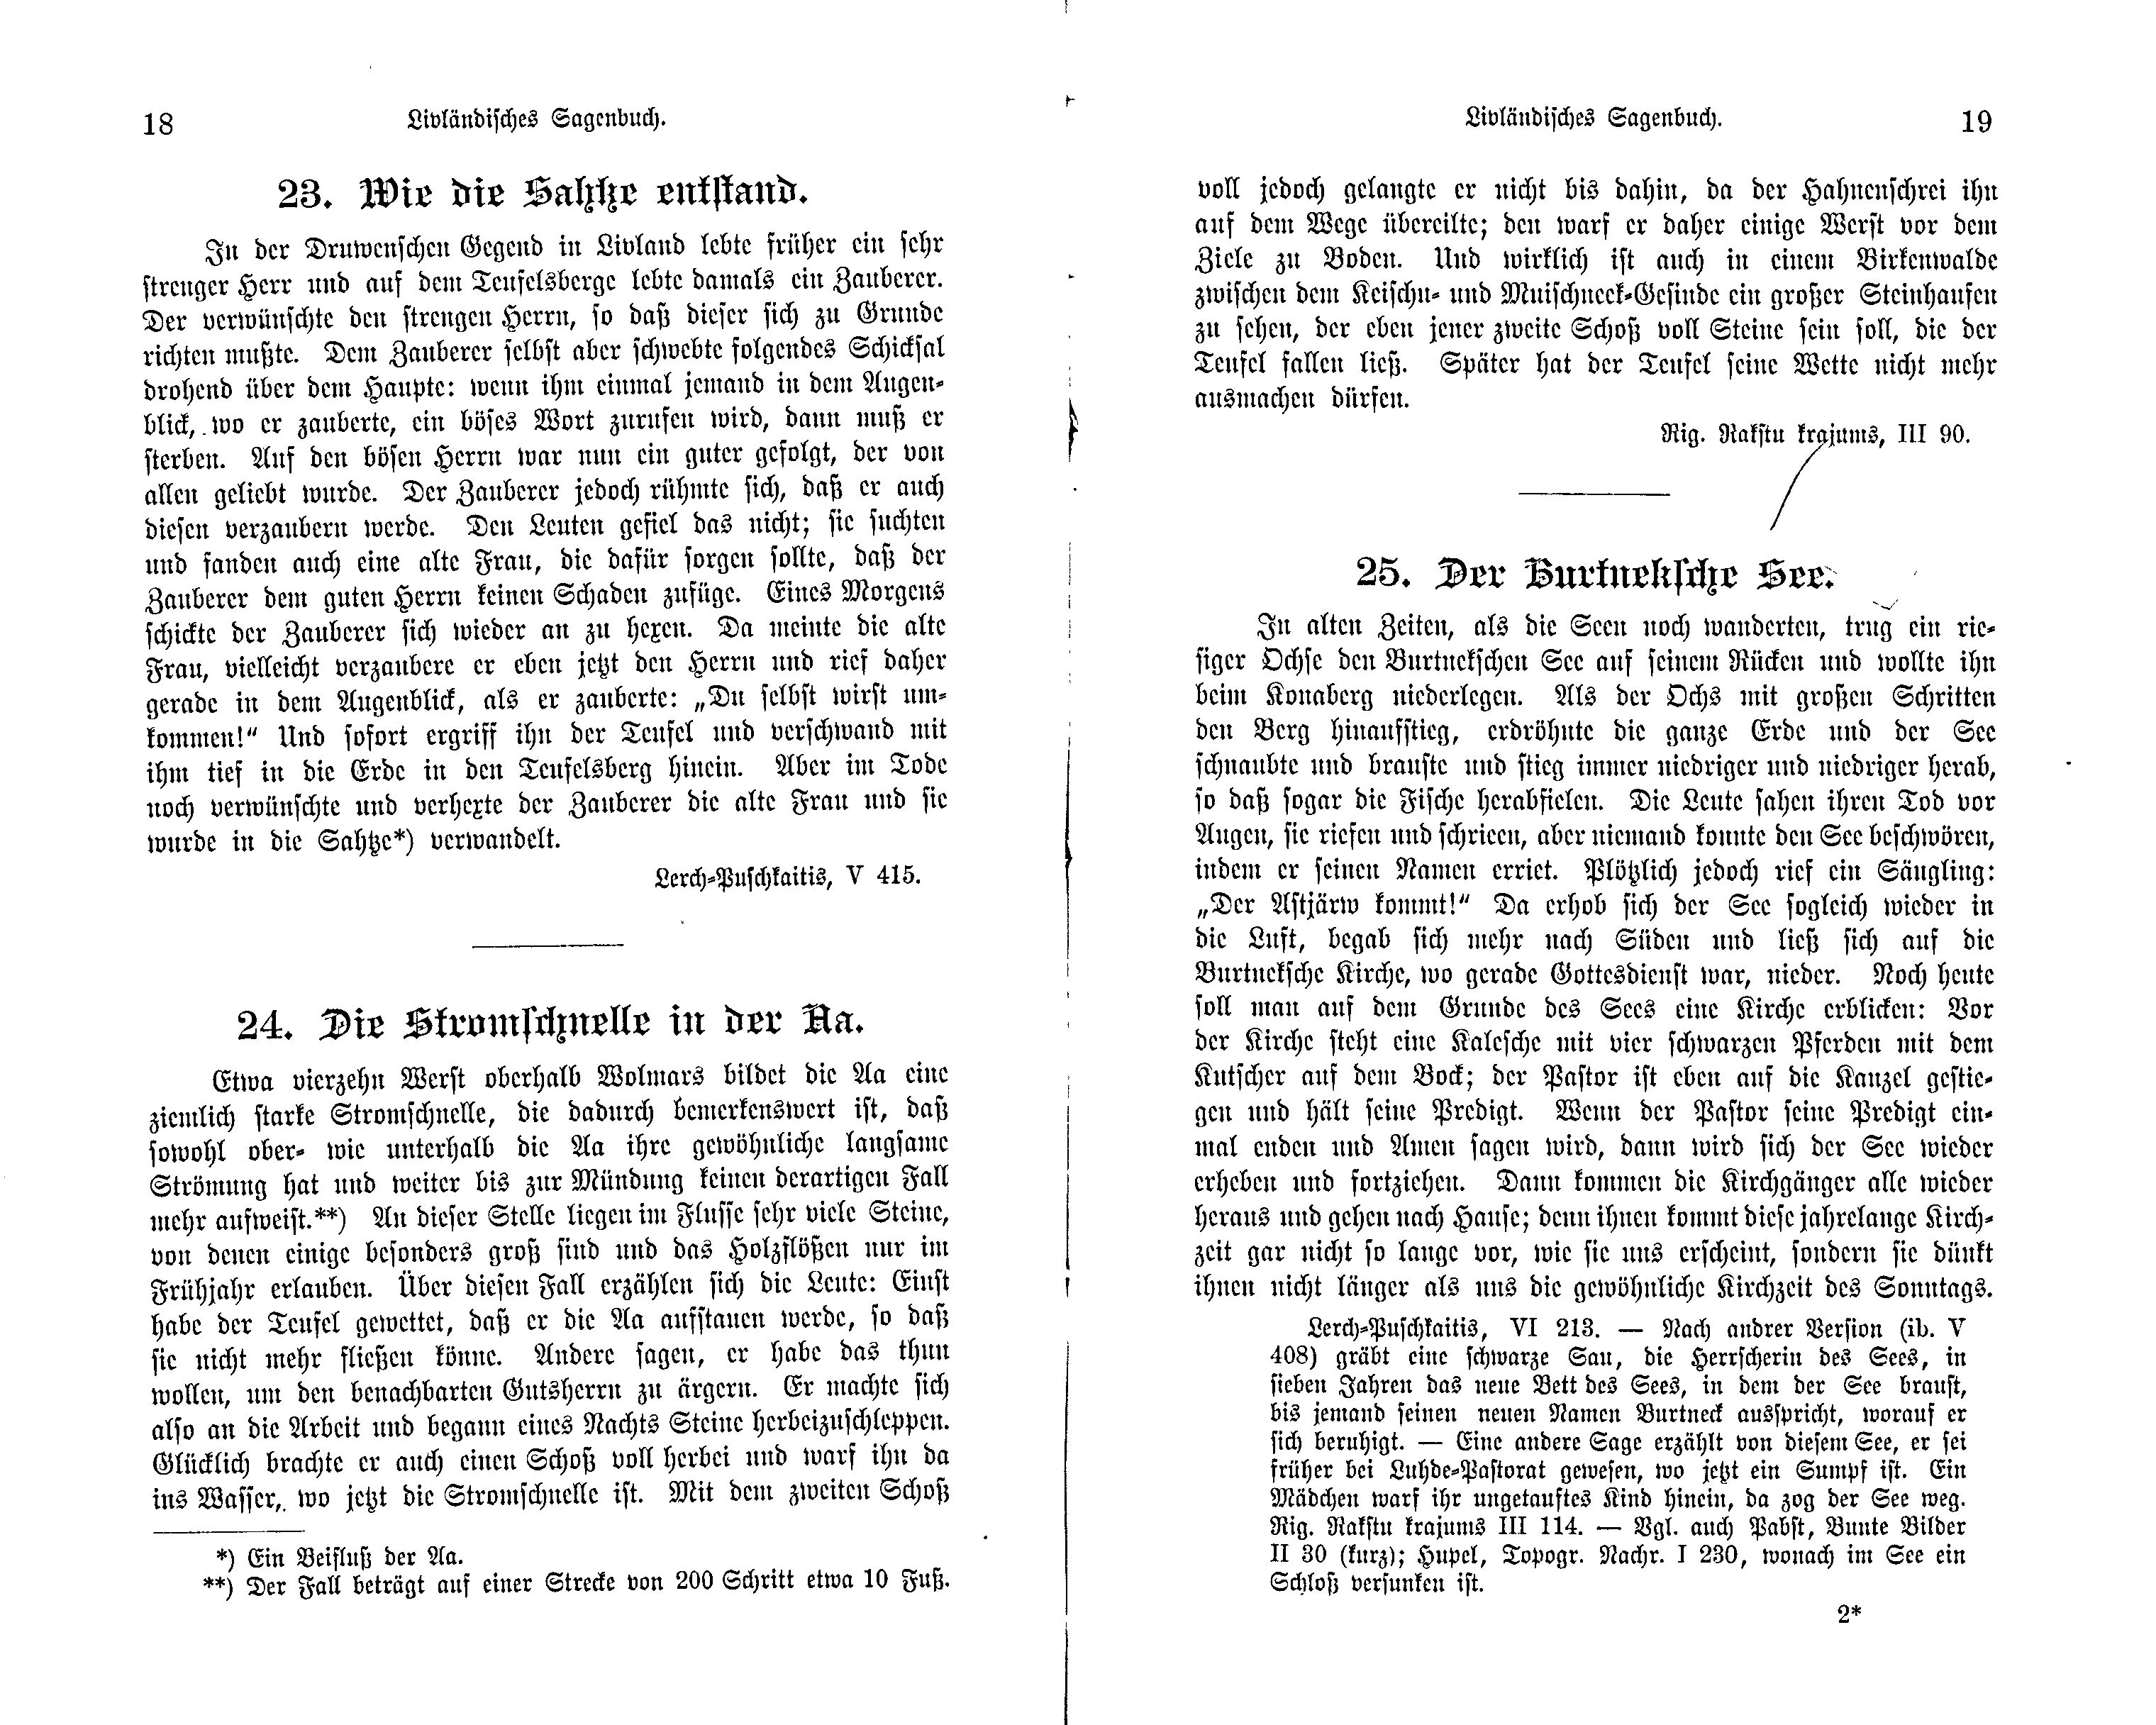 Der Burtneksche See (1897) | 1. (18-19) Haupttext